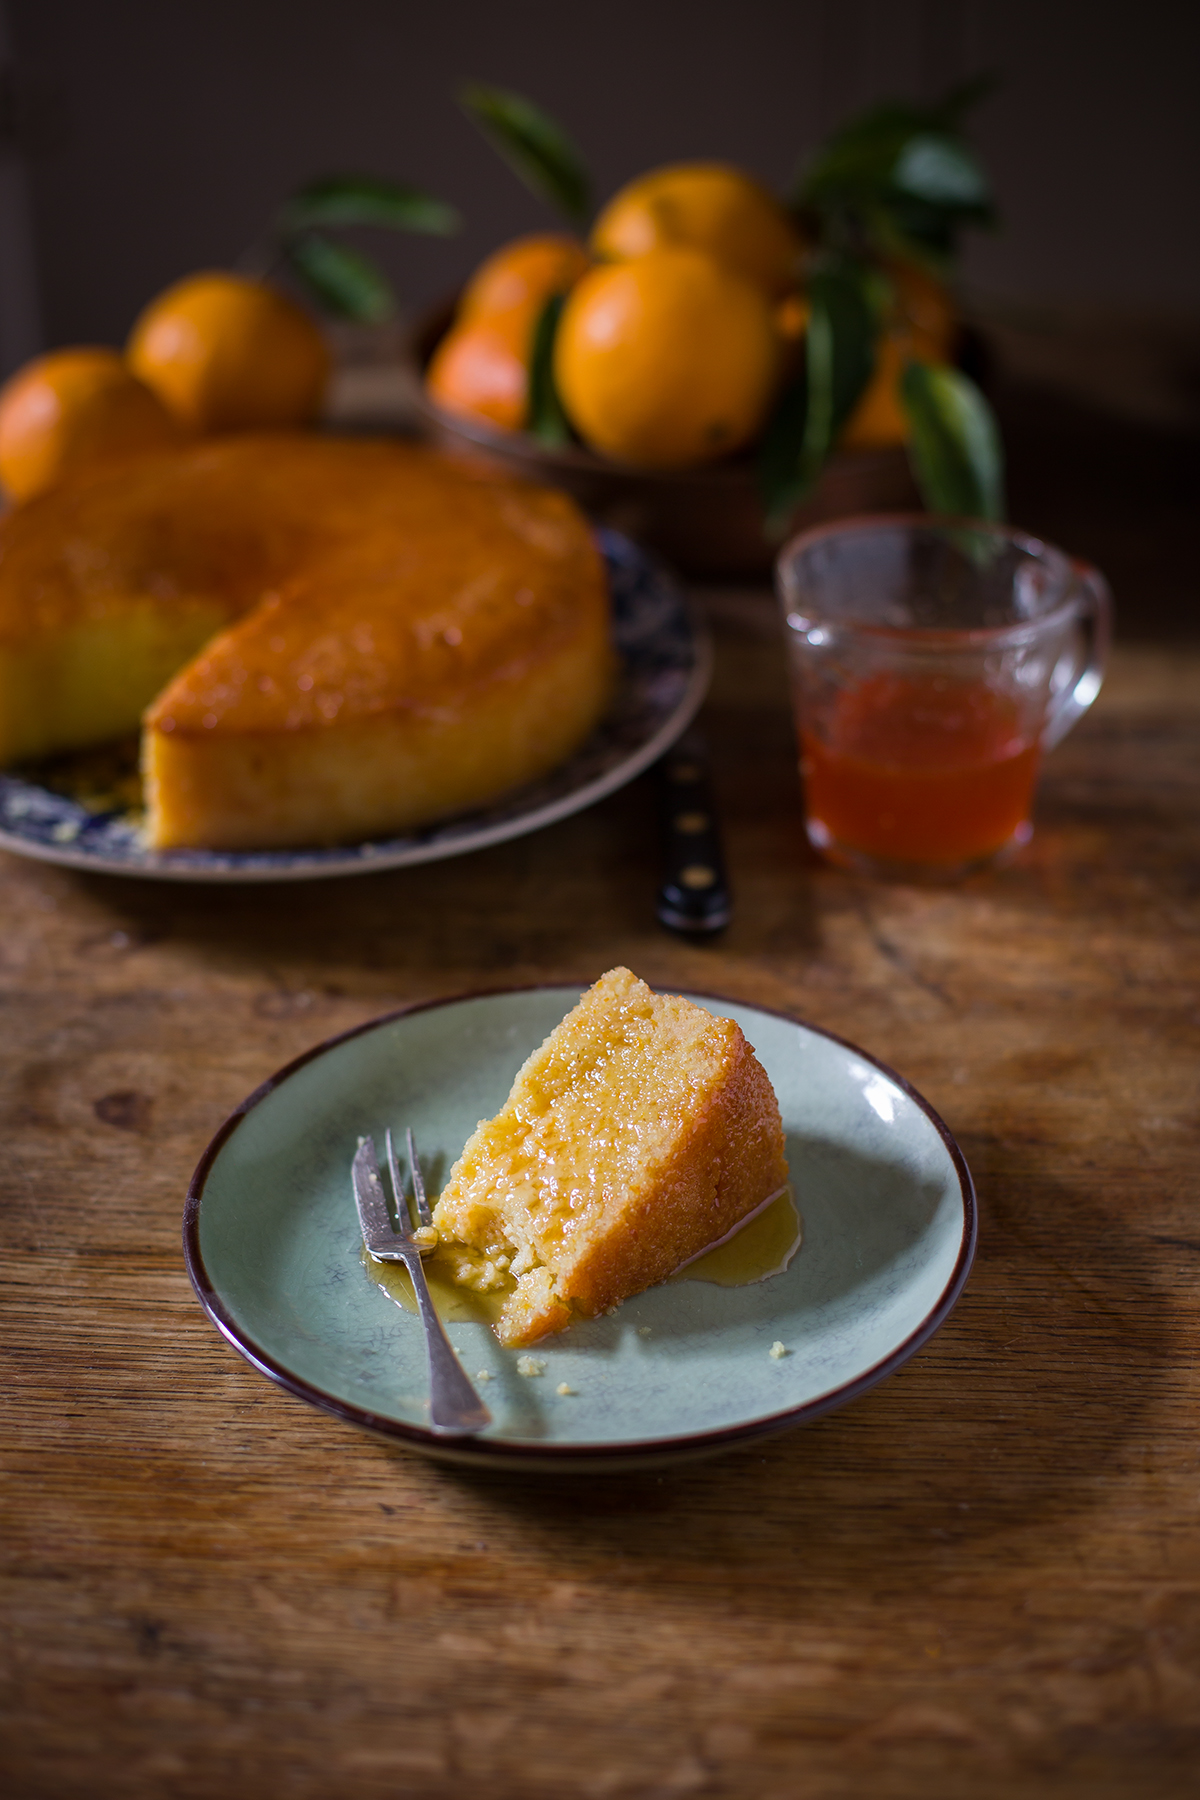 orange & campari cake from Polpo